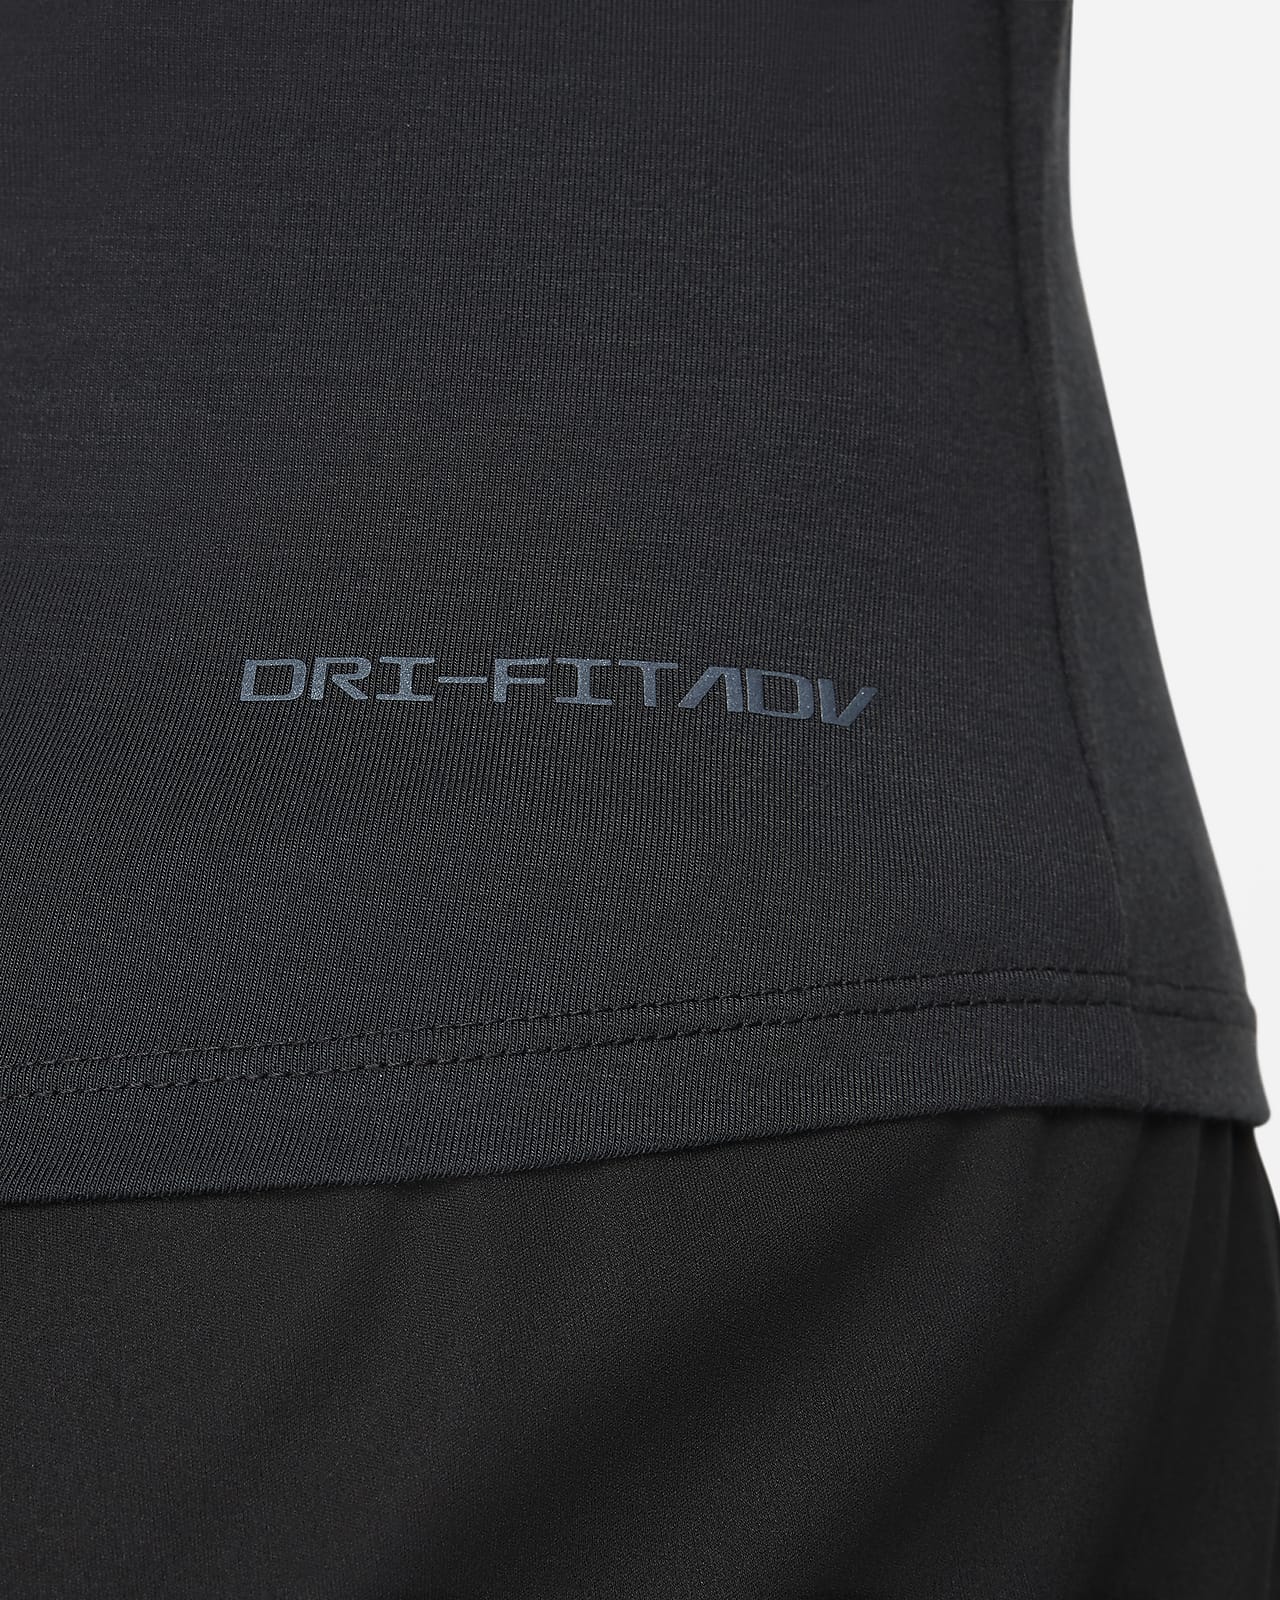 Nike Dri-FIT ADV Run Division - Running shirt Women's, Buy online